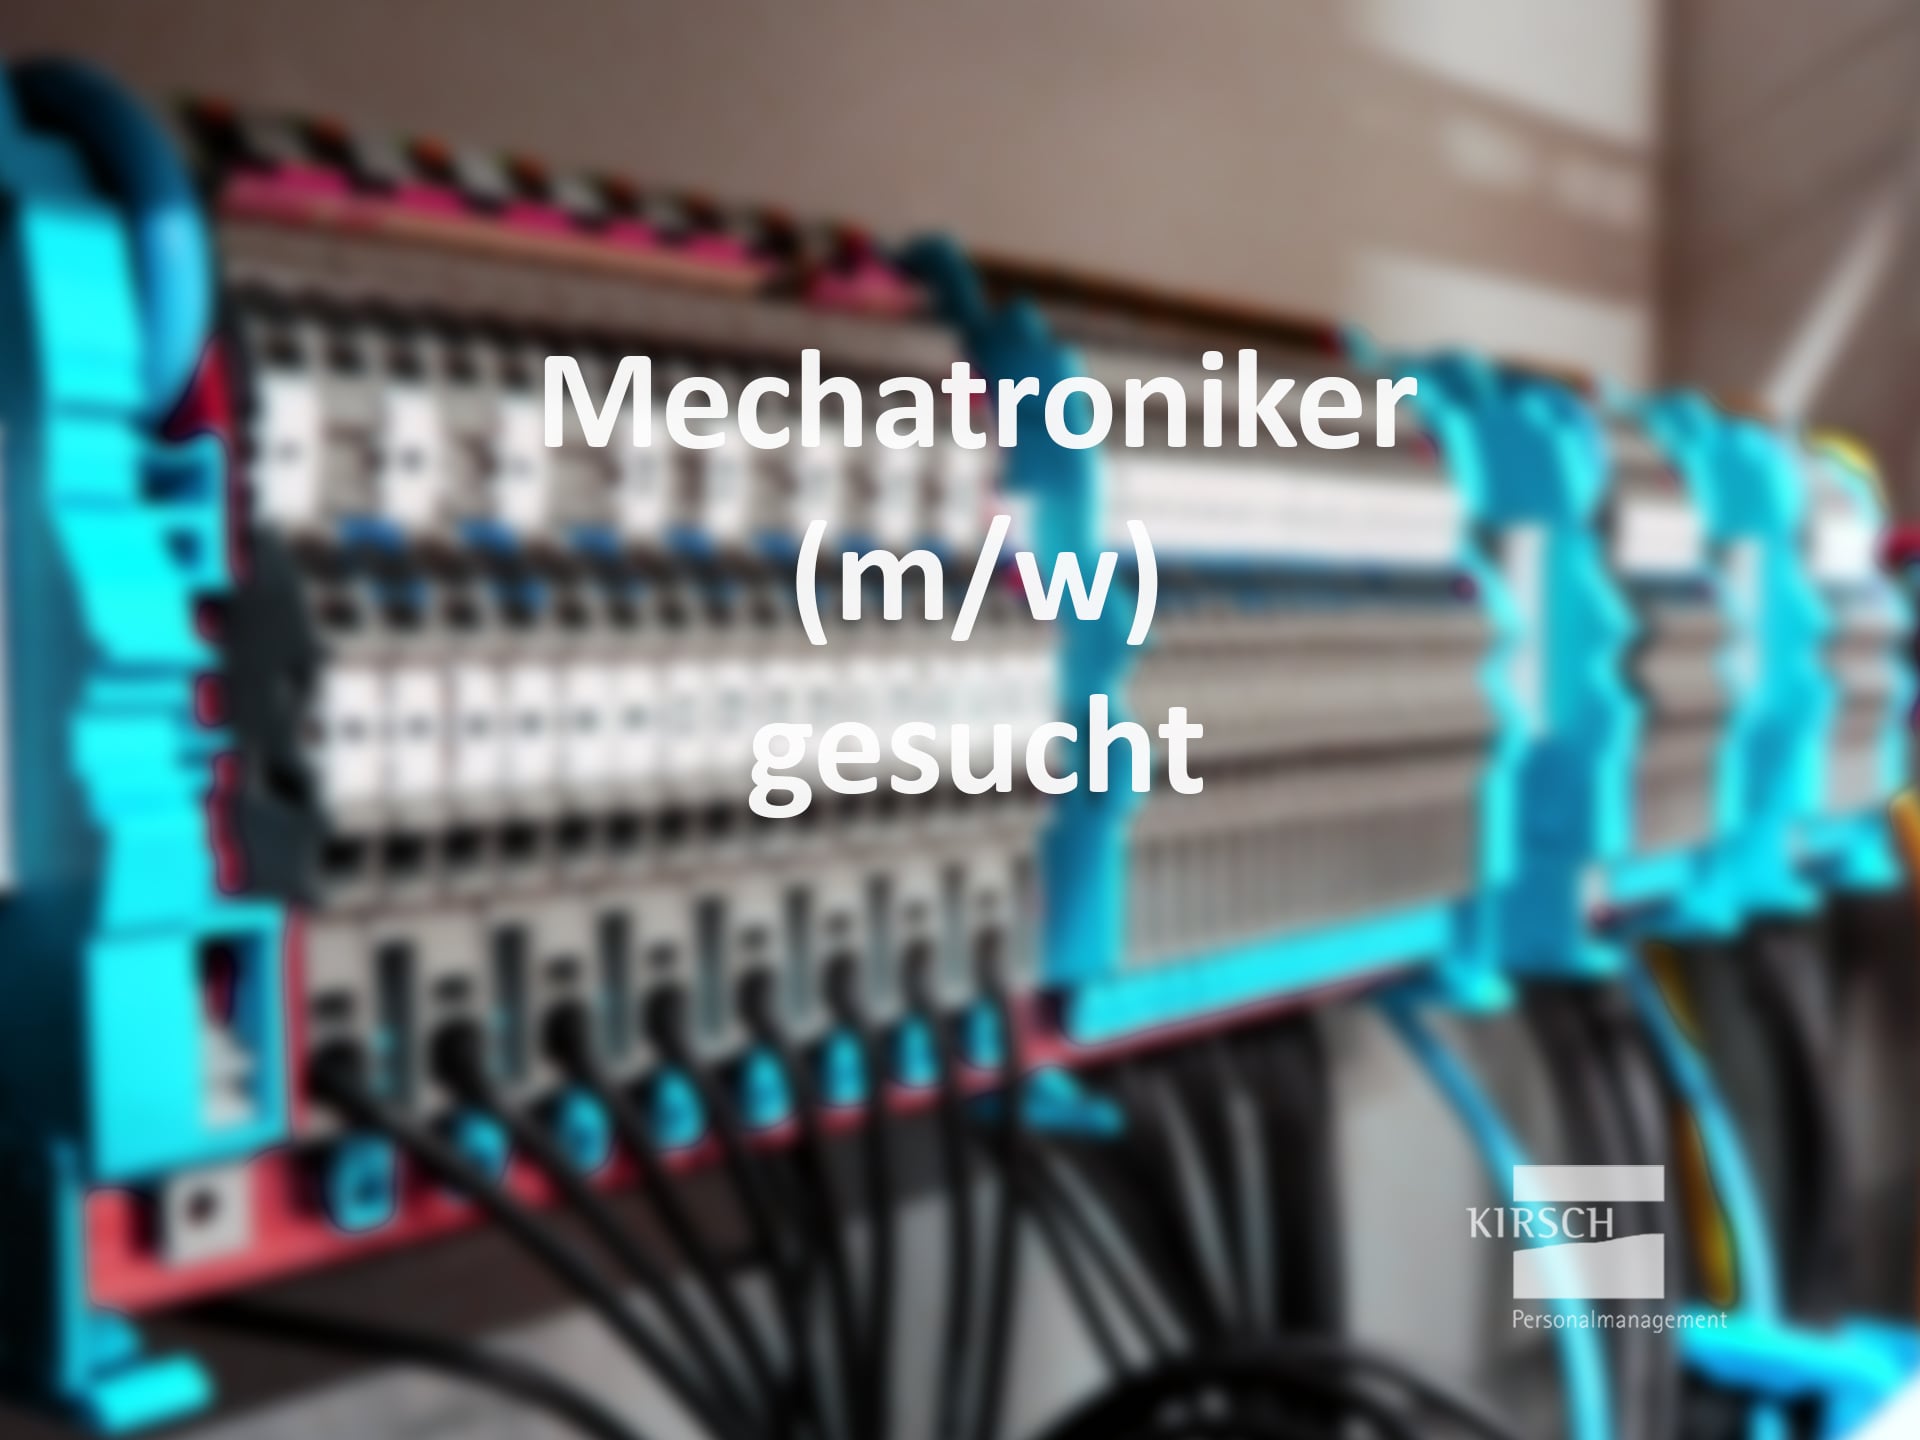 Mechatroniker gesucht - Kirsch GmbH Personalmanagement